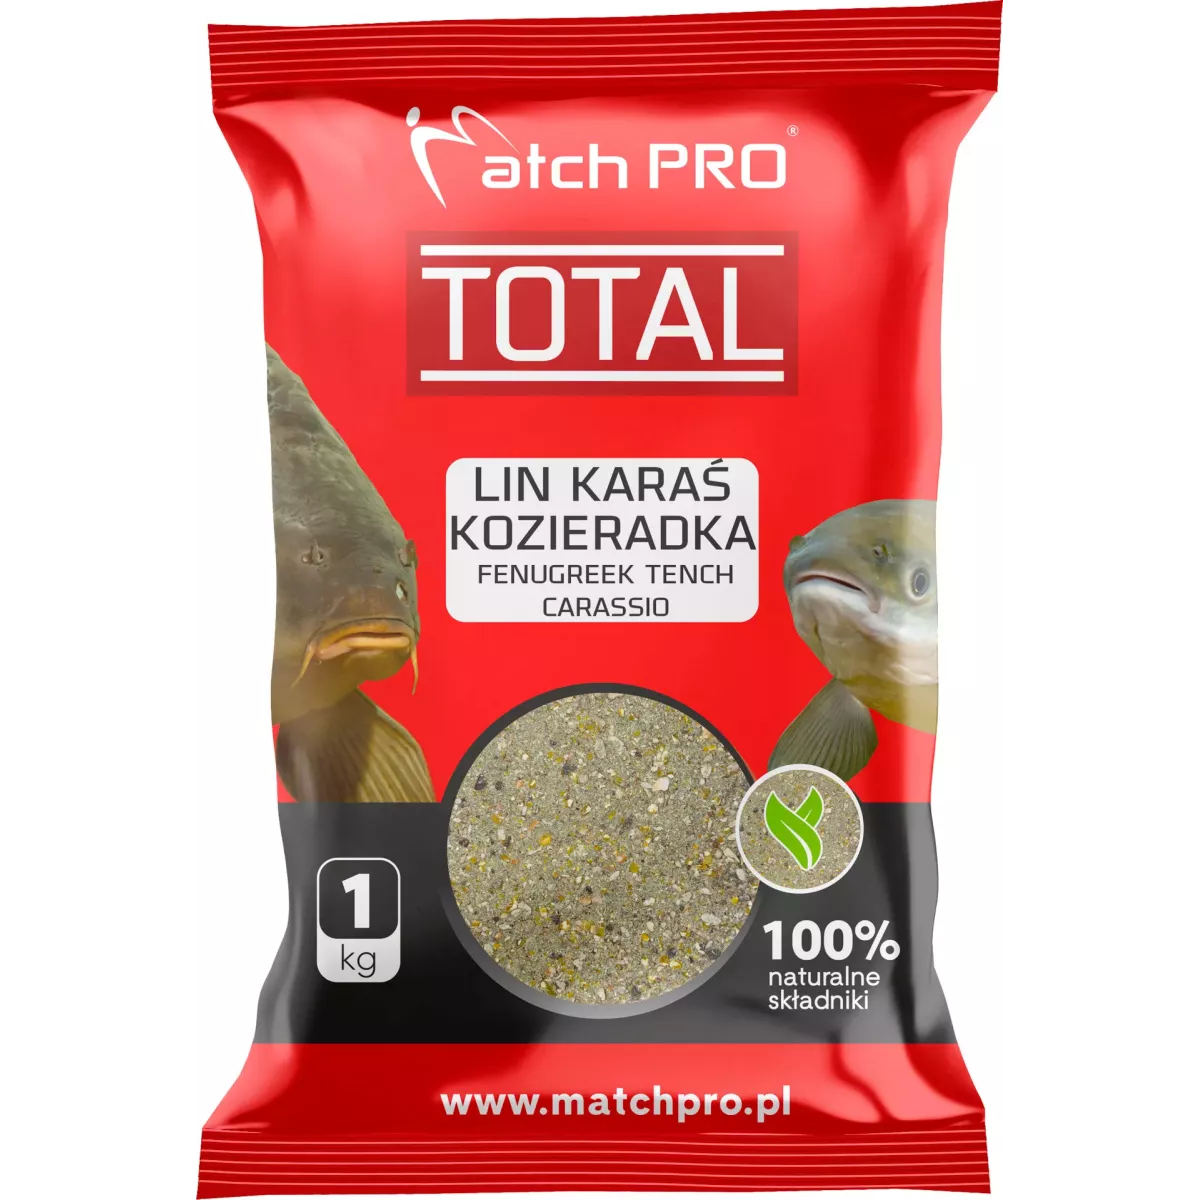 Zanęta MatchPro Total 1kg - LIN KARAŚ KOZIERADKA